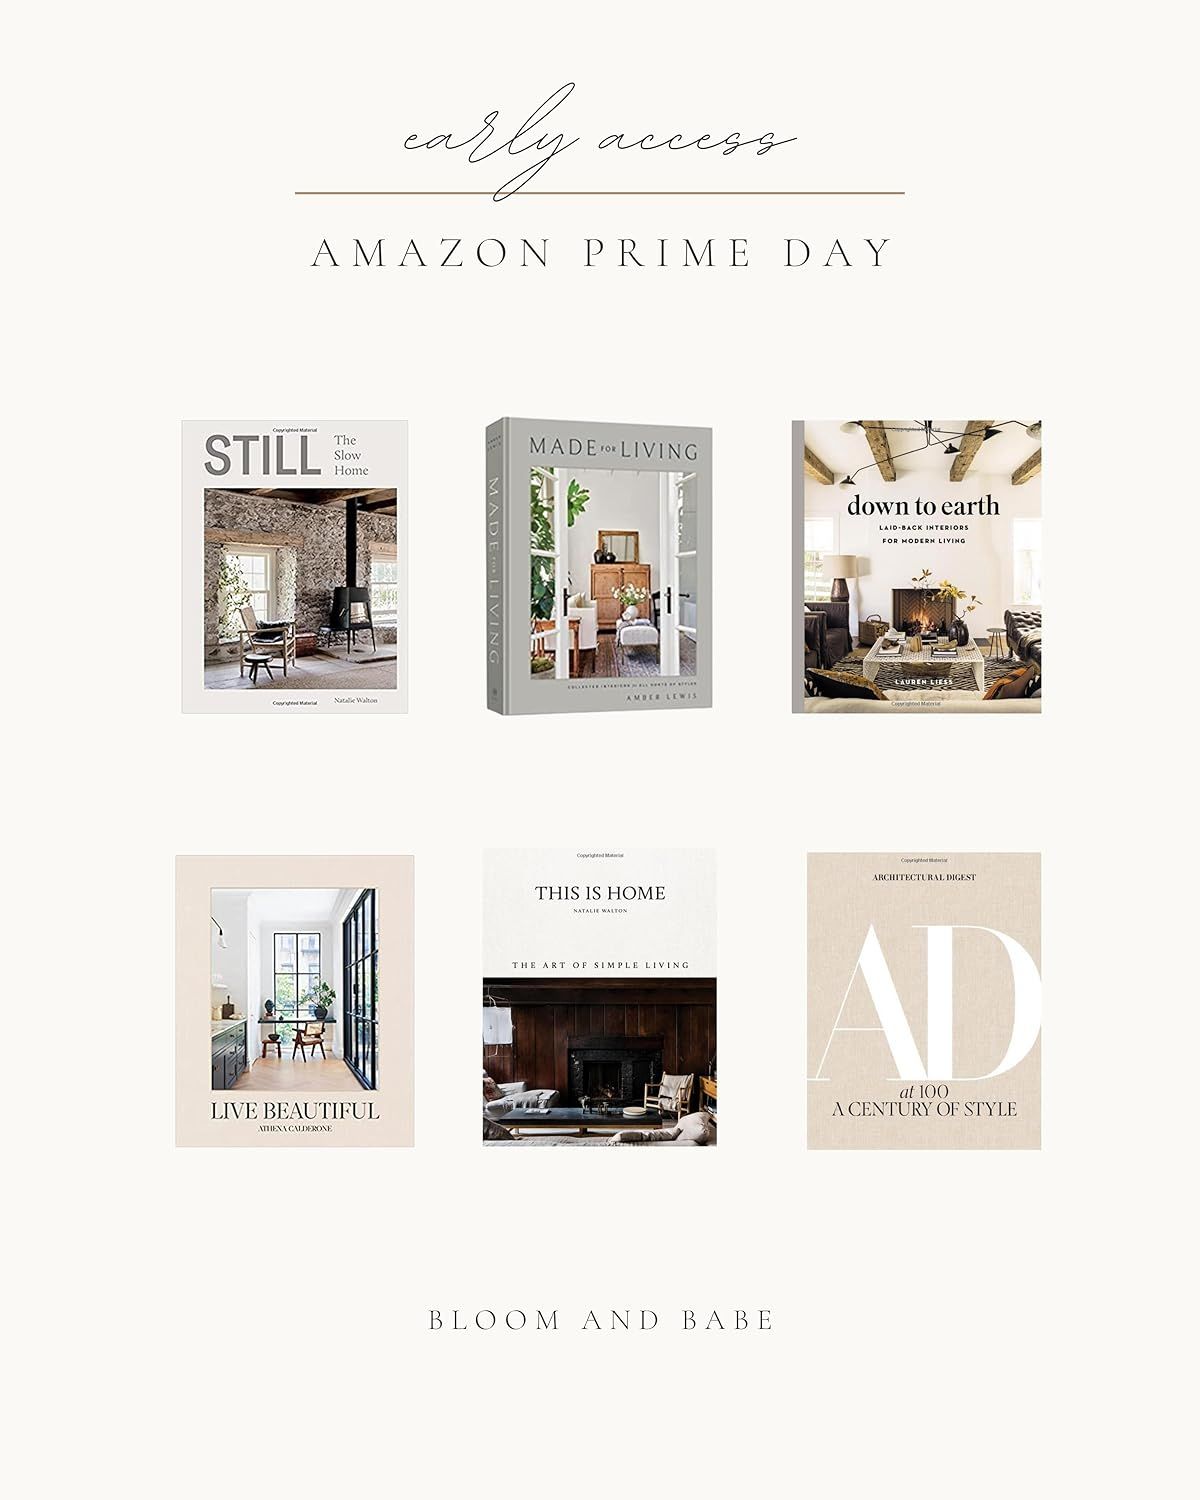 Bloom and Babe's Amazon Page | Amazon (US)